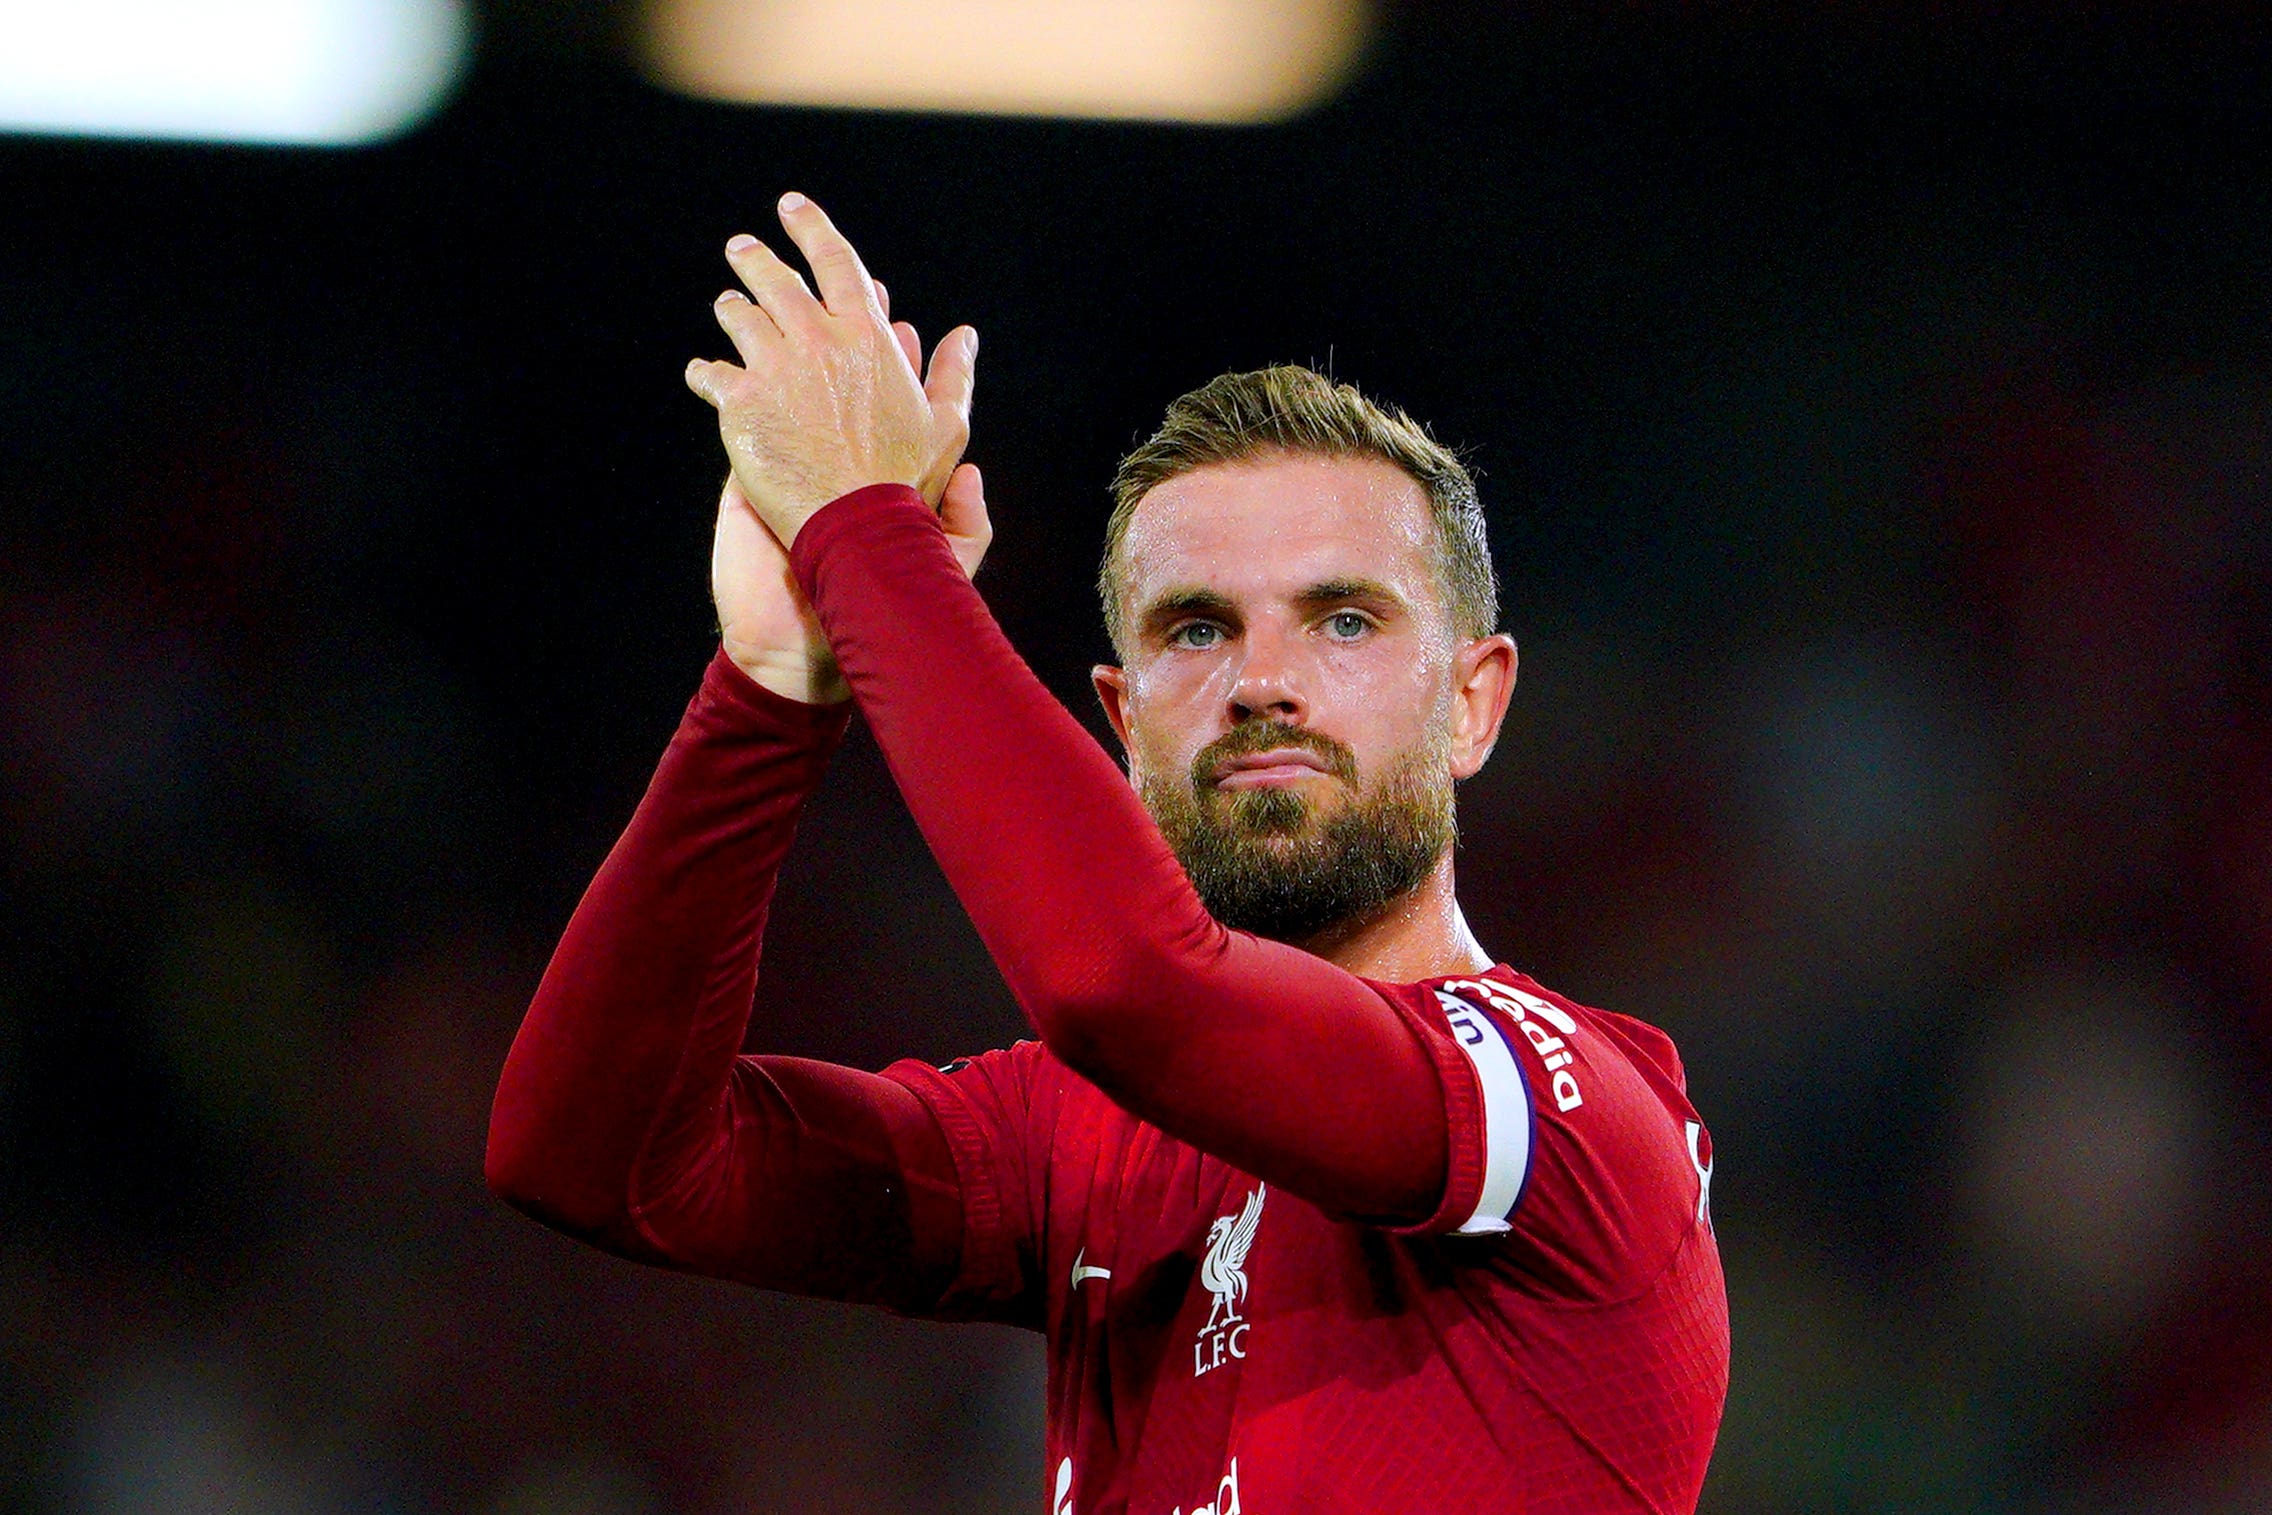 Liverpool captain Jordan Henderson has completed his move to Saudi Arabia side Al-Ettifaq